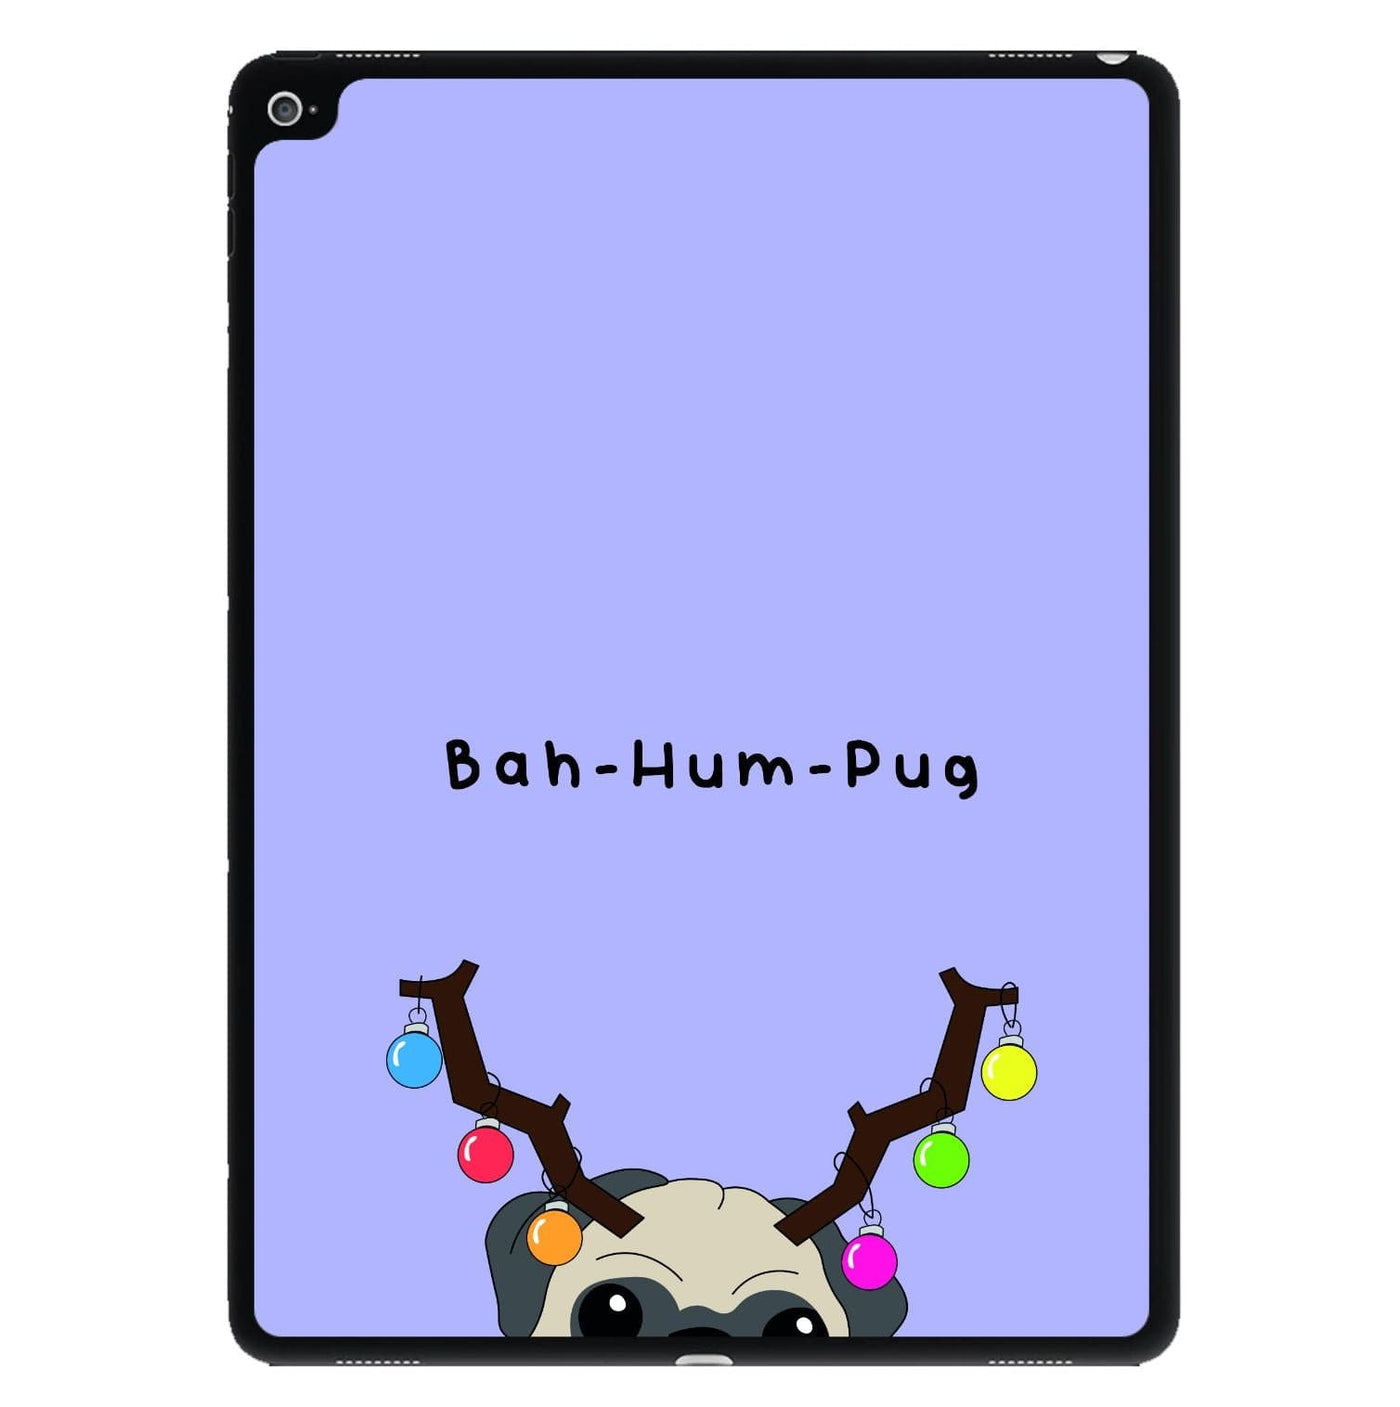 Buh-hum-pug - Christmas iPad Case